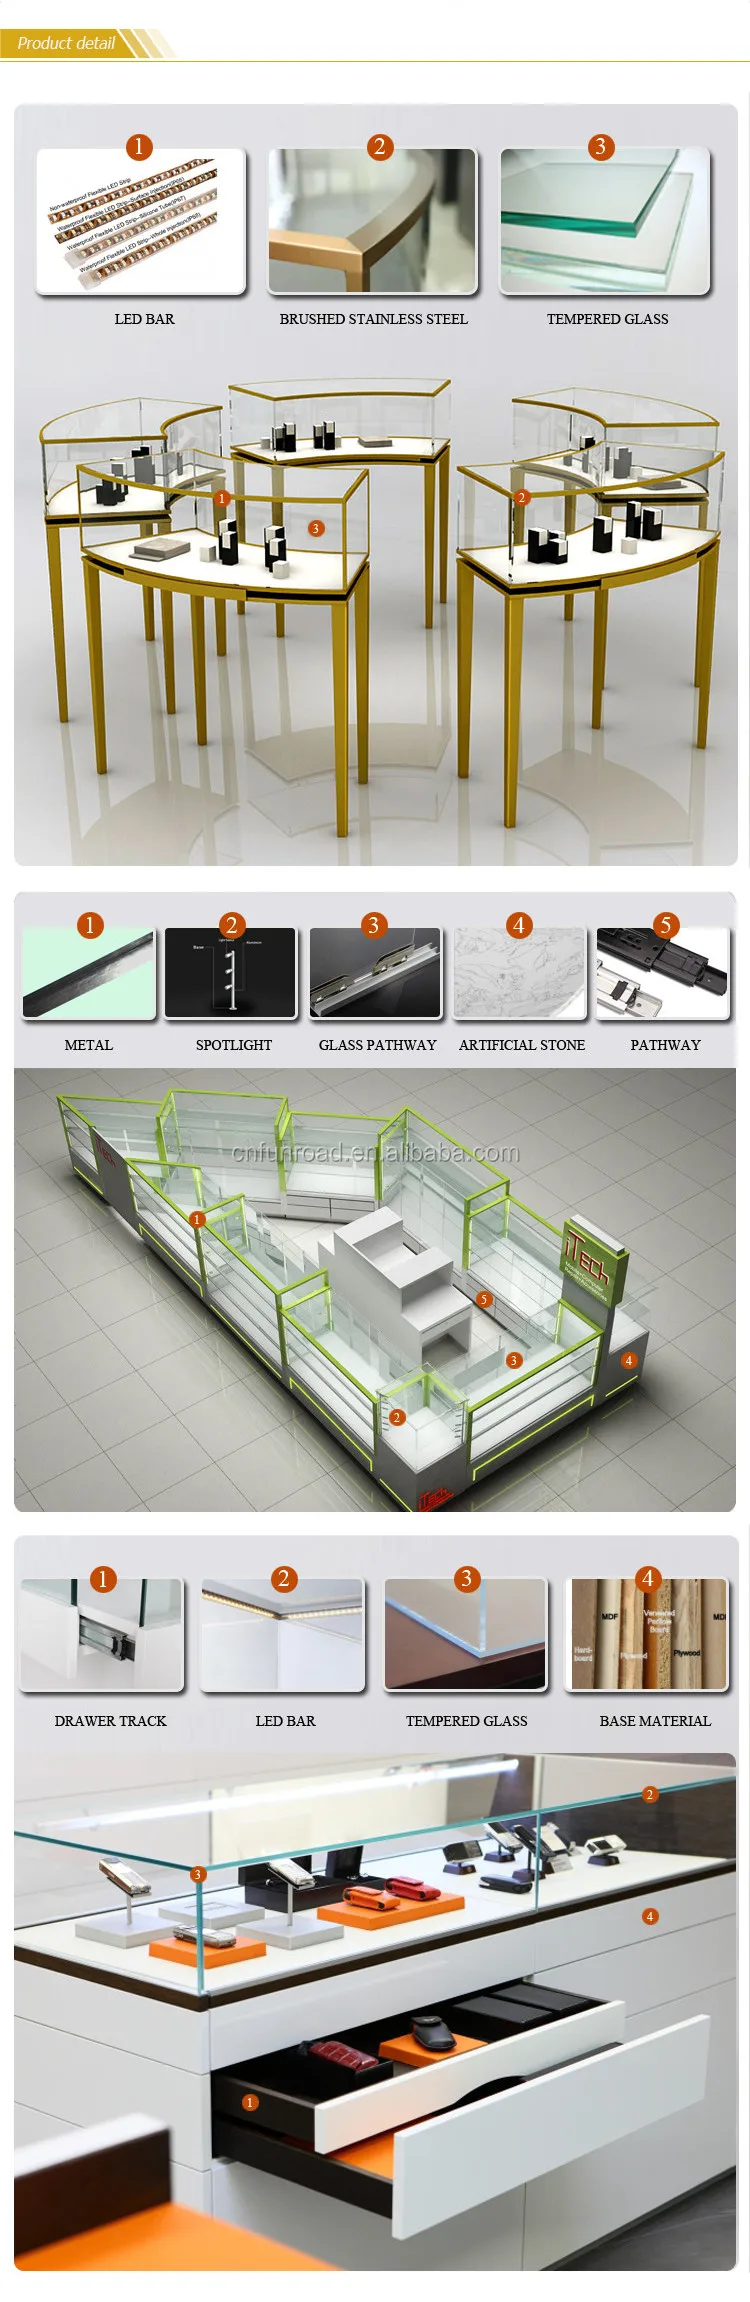 China factory mobile phone repair kiosk accessory mall kiosk 3D design